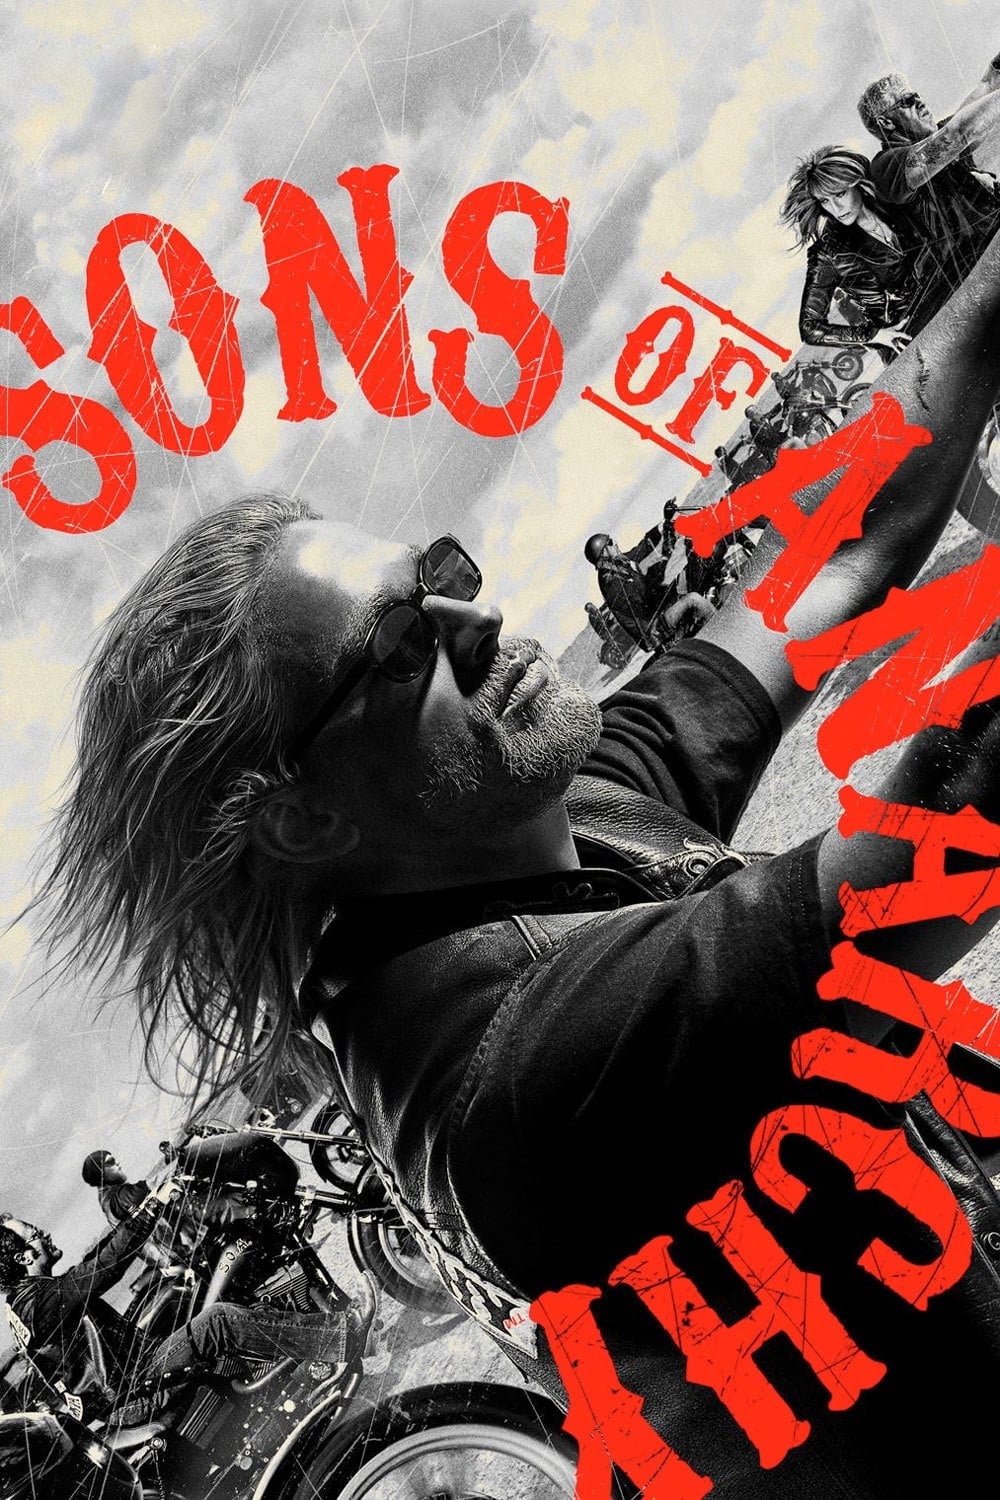 Sons of Anarchy (2008 - 2014) Seizoen 6 Disc 2 BD50